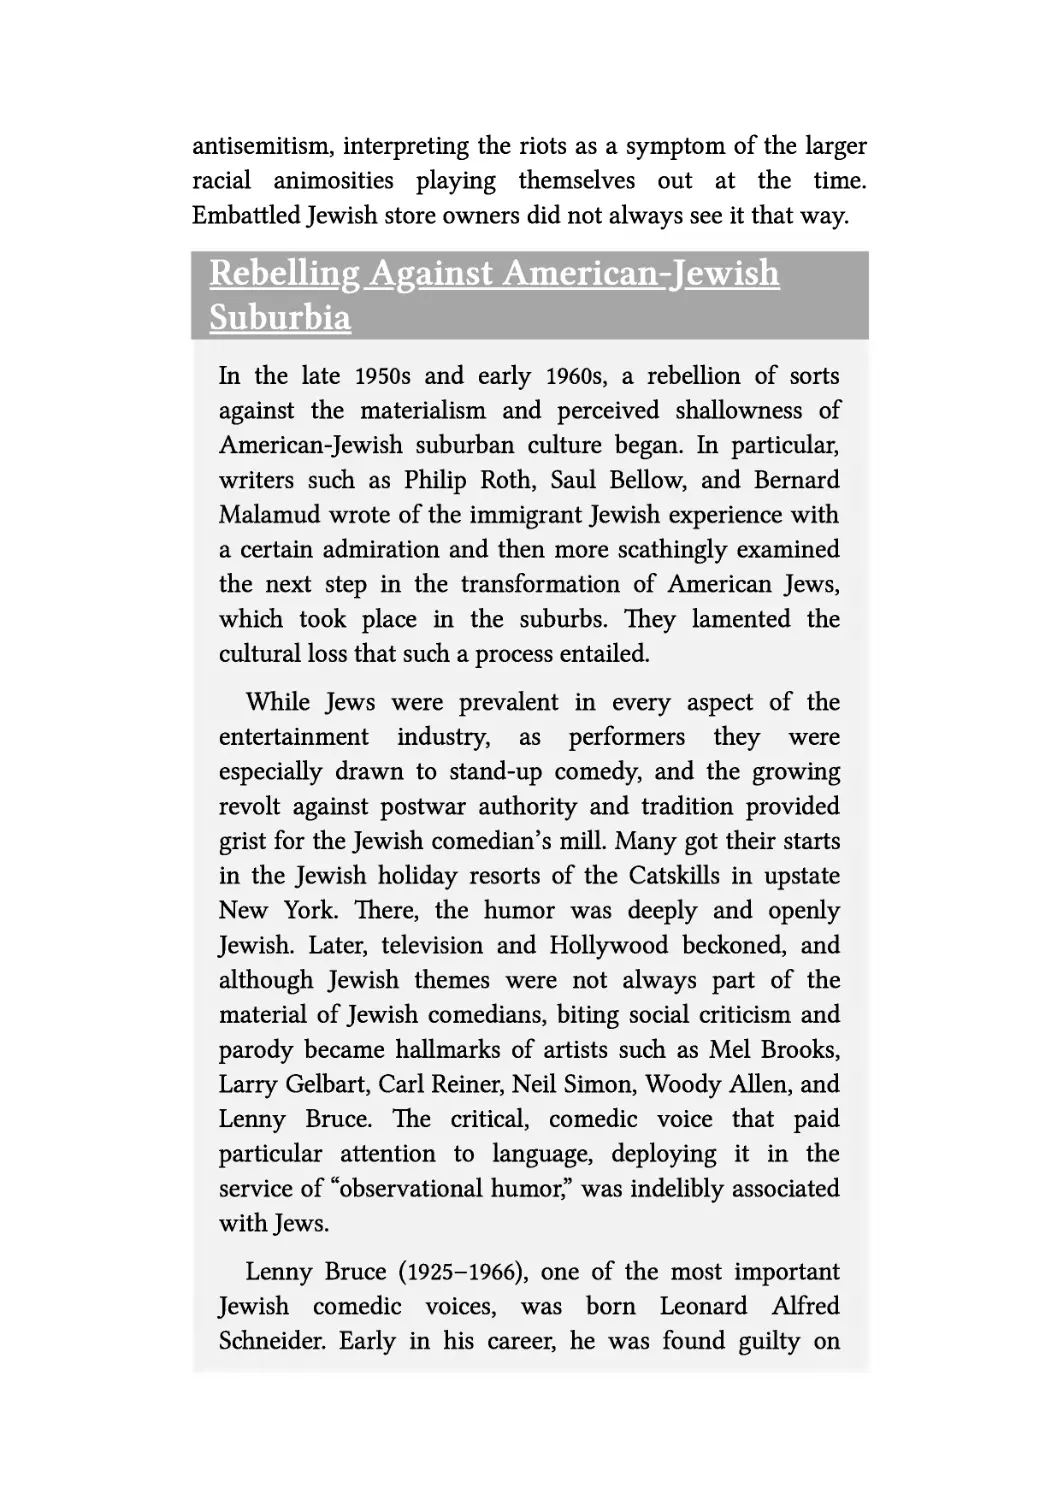 Rebelling Against American-Jewish Suburbia